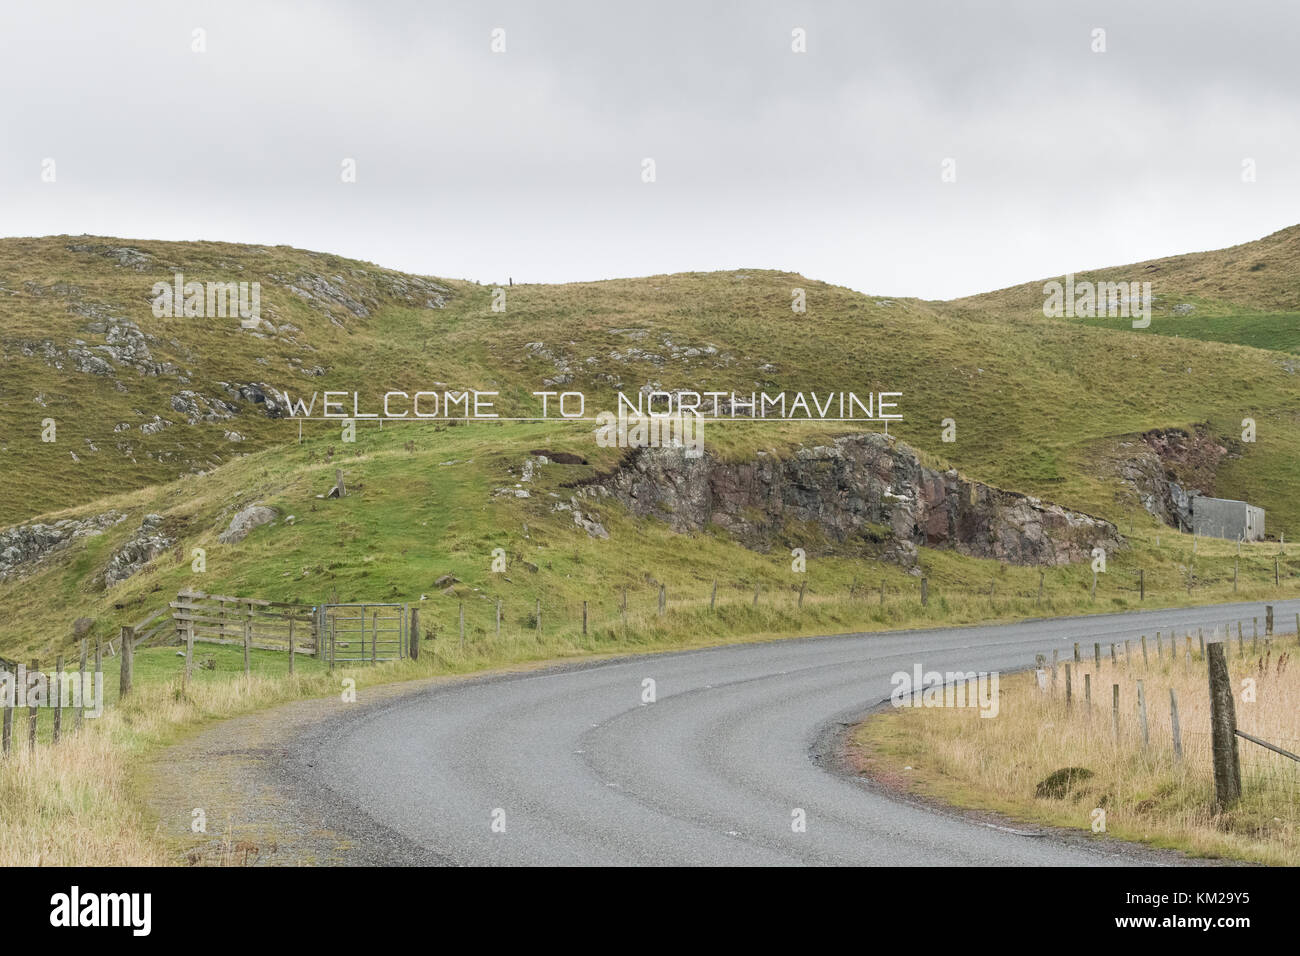 Welcome to Northmavine sign, Mavis Grind, Shetland Mainland, Scotland, UK Stock Photo